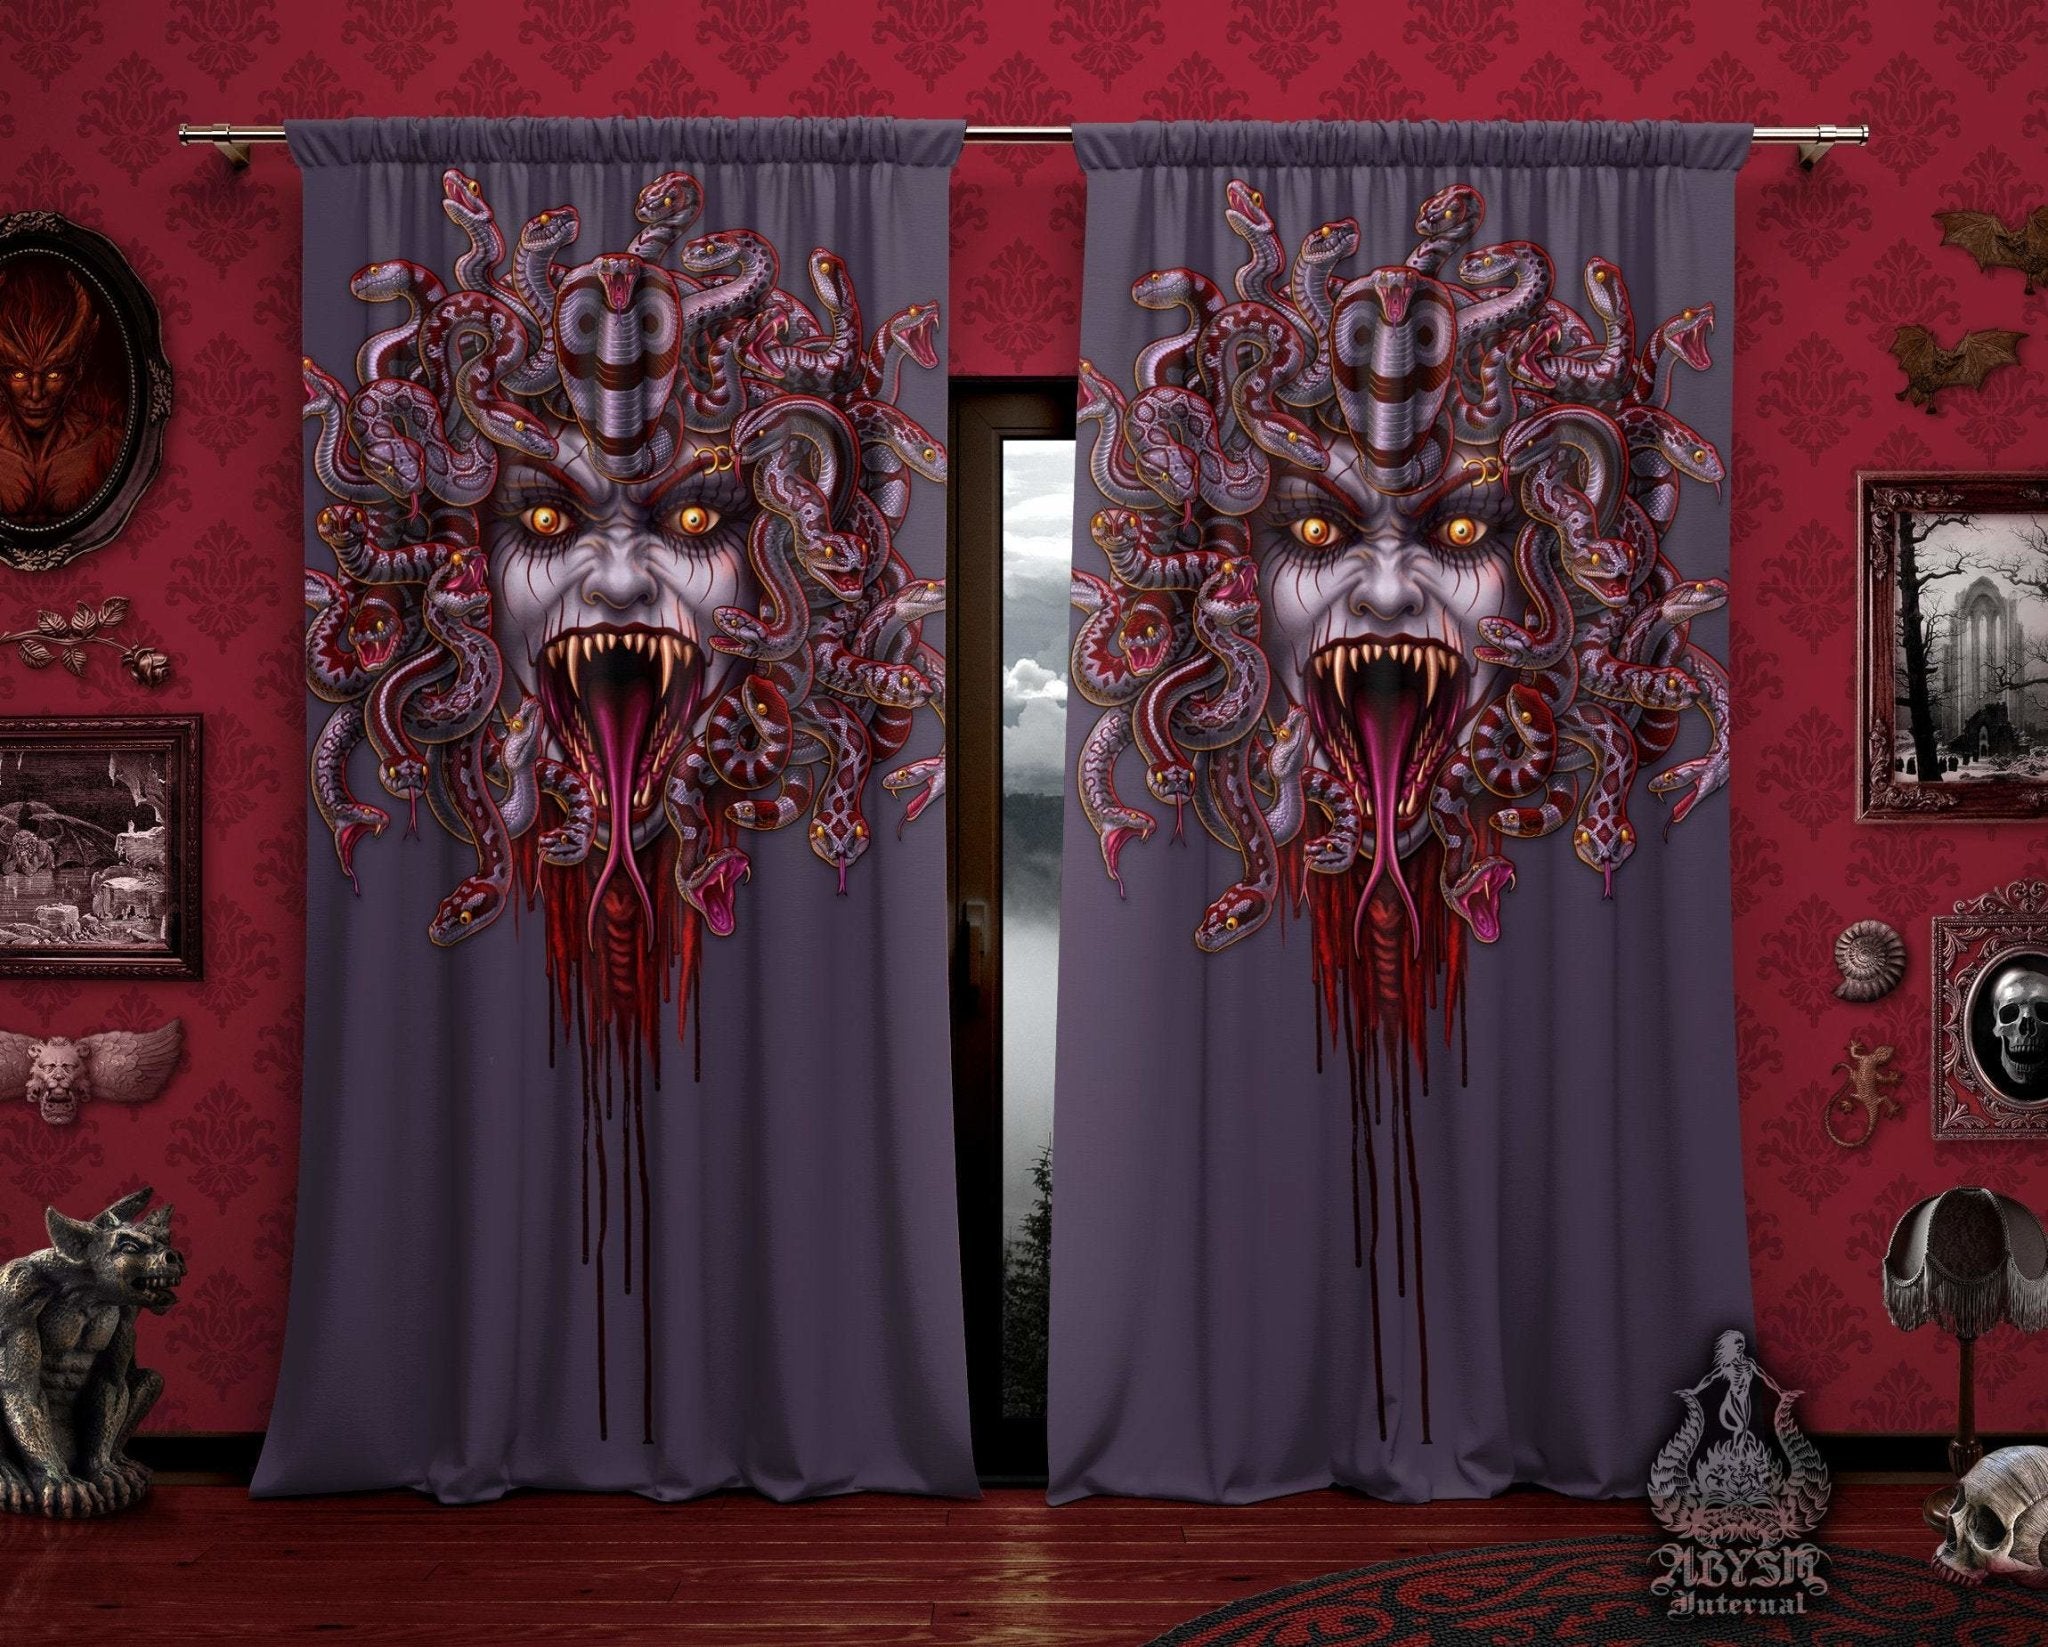 Medusa Blackout Curtains, Long Window Panels, Goth Art Print, Halloween Room Decor - Bloody Ash, Grey Snakes, Enraged - Abysm Internal